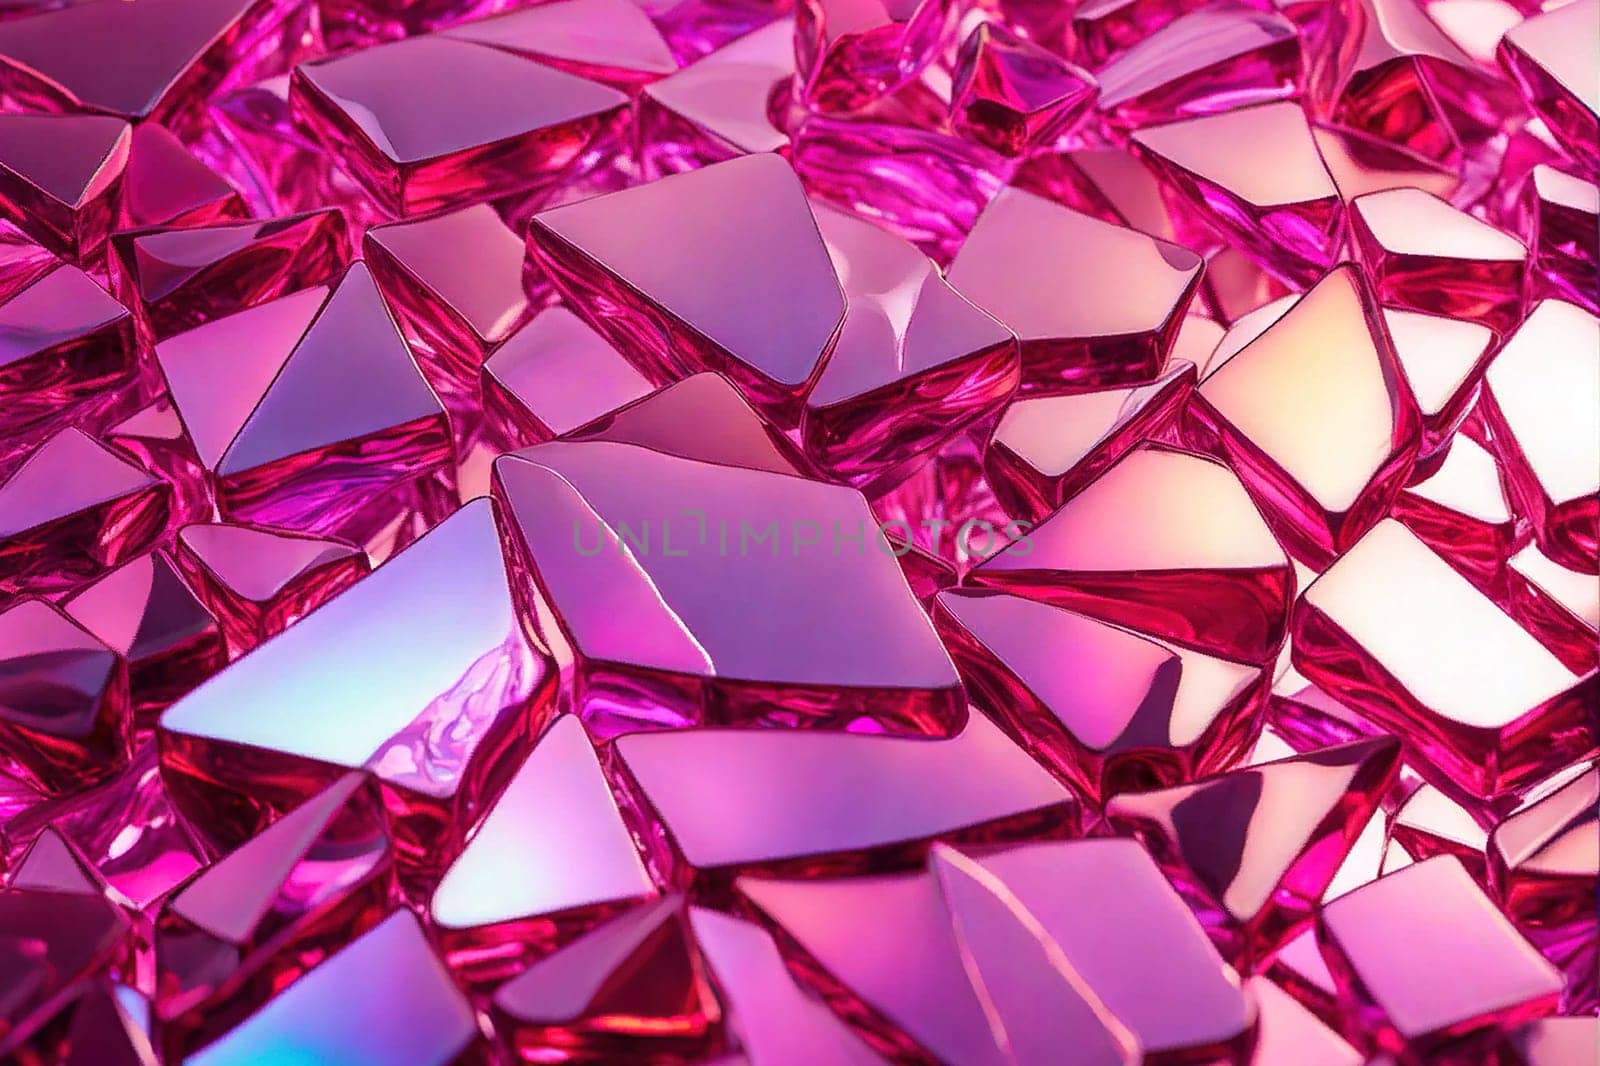 Broken pink glass pieces beautiful texture. Complicated family life